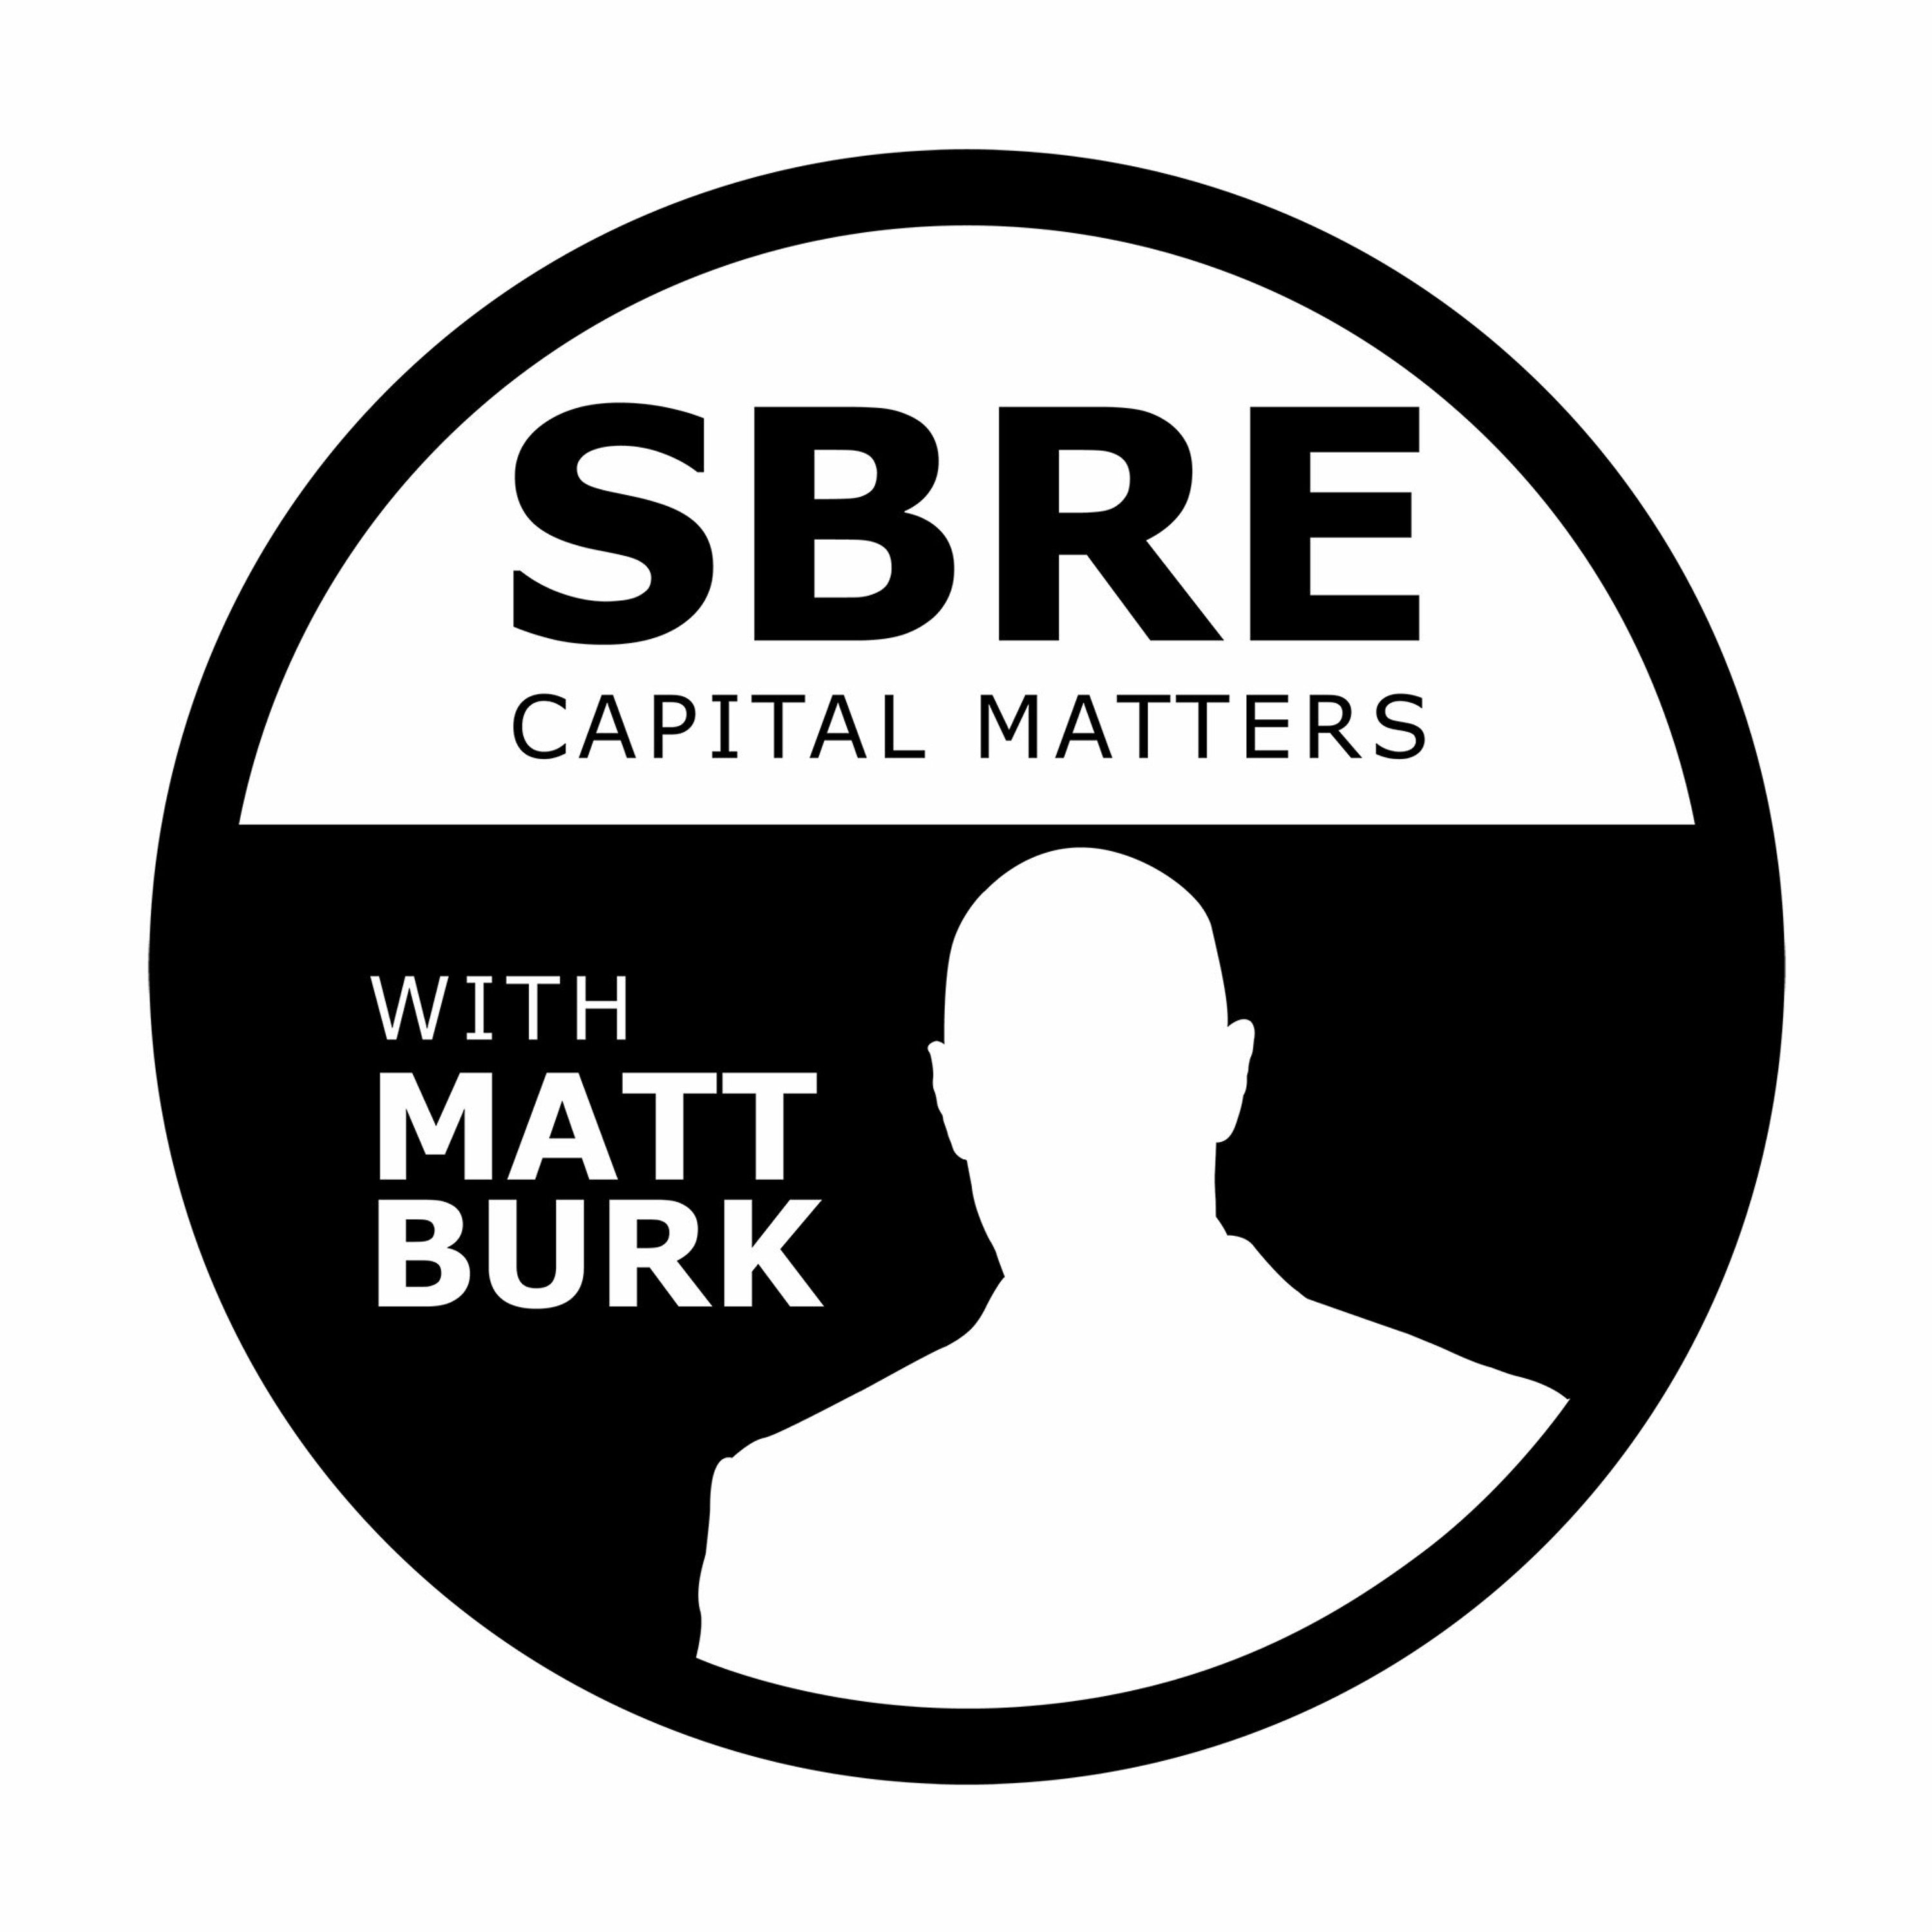 SBRE Capital Matters With Matt Burk SHOW #13 2/7/18